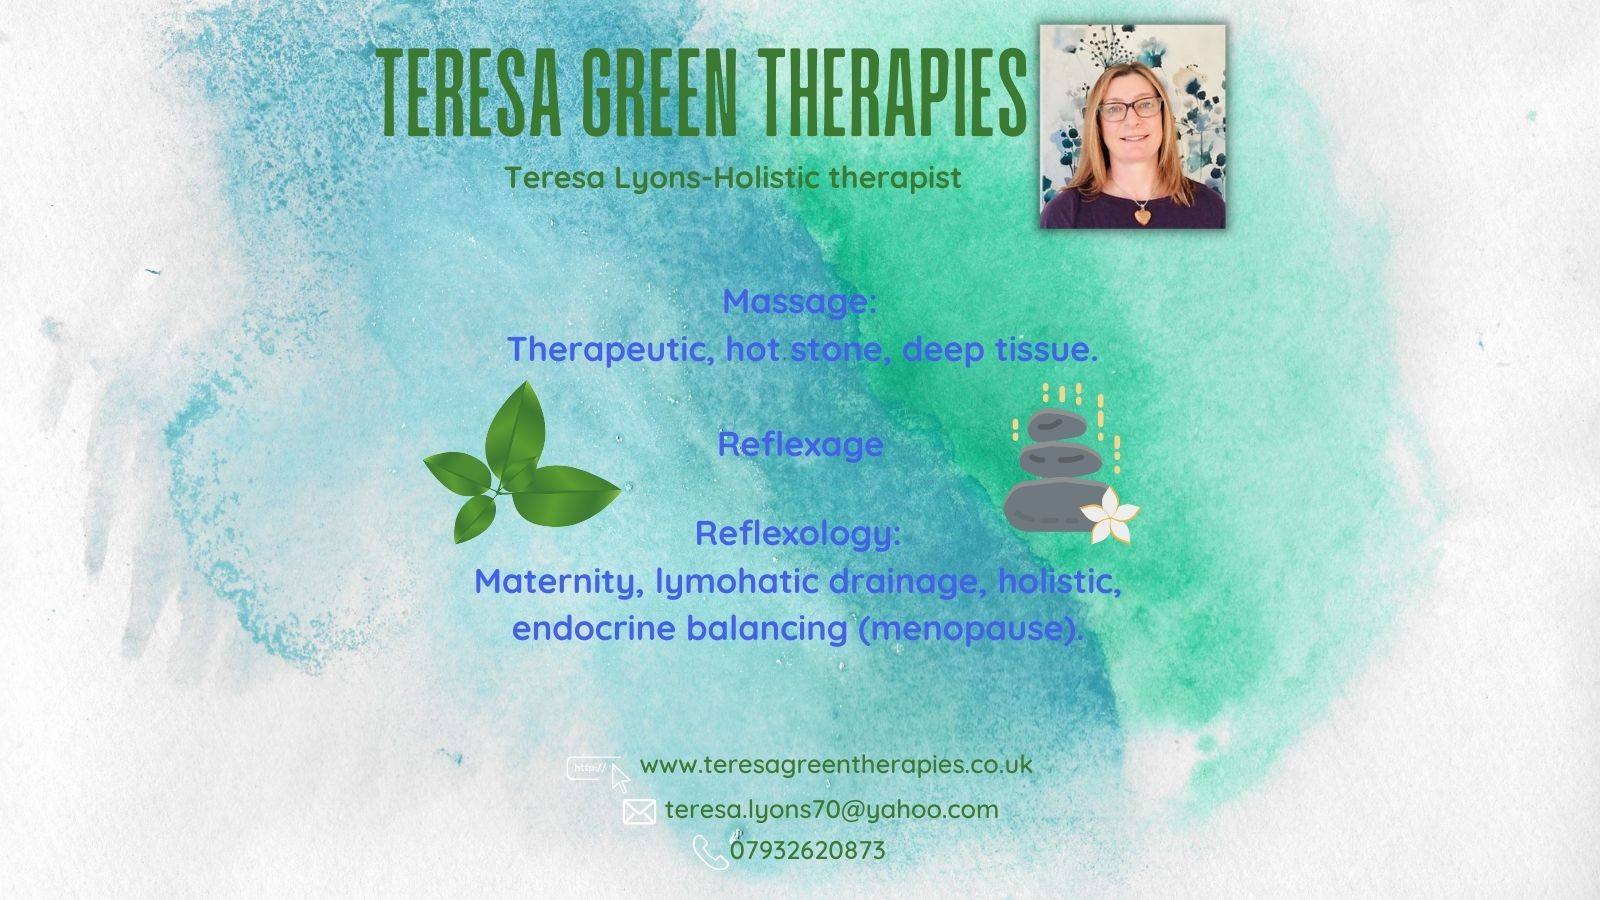 Teresa Green Therapies